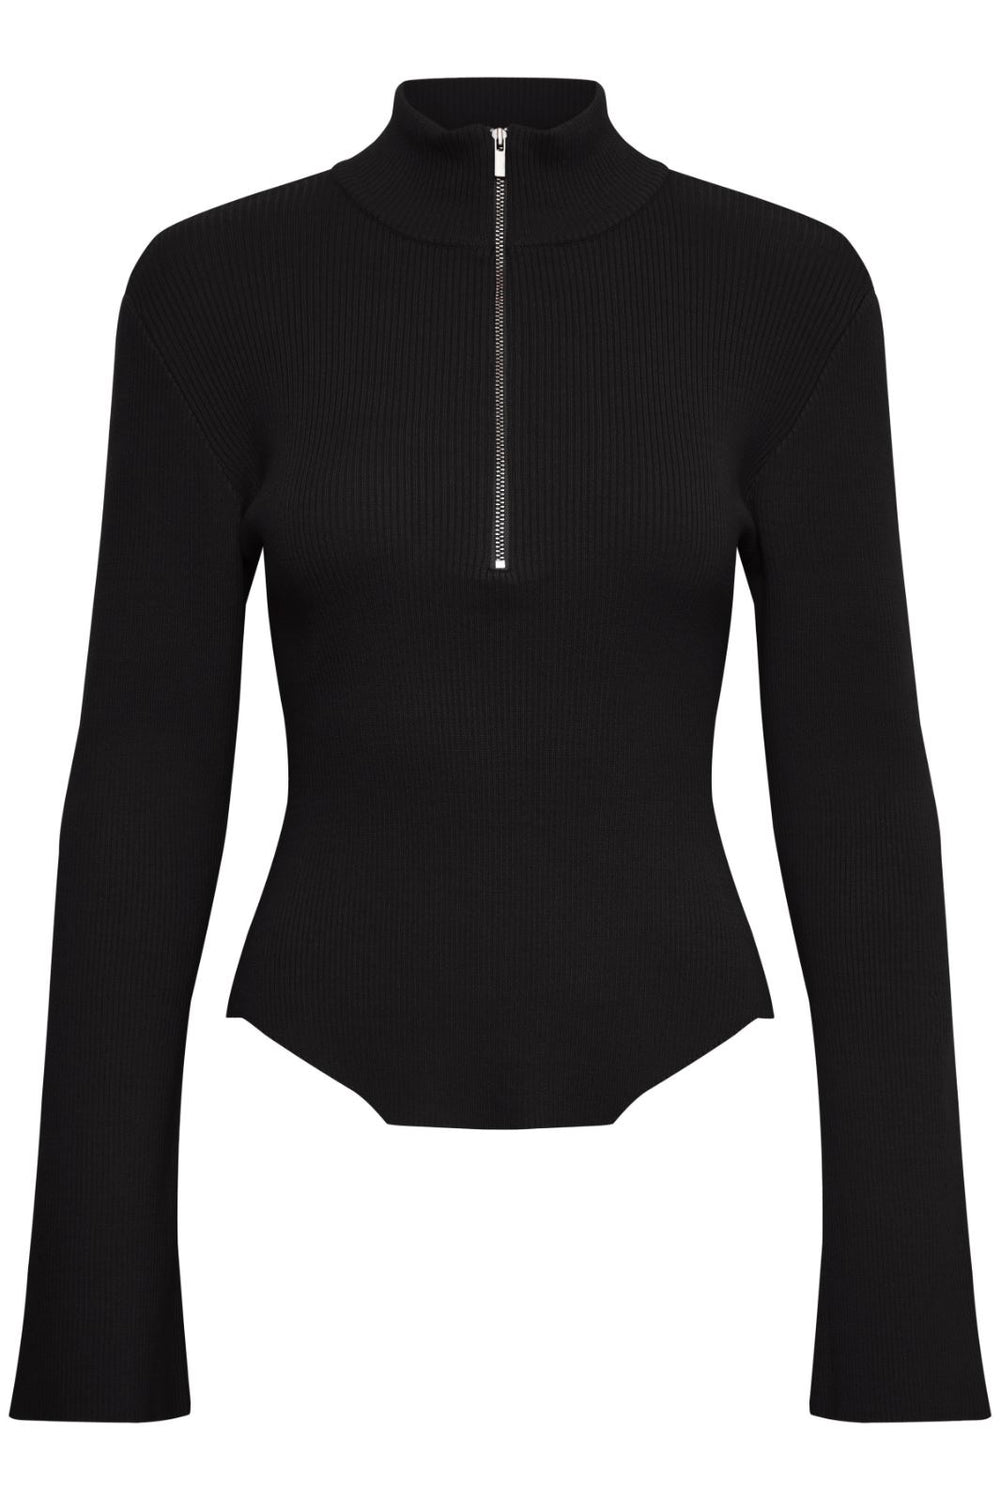 Gestuz - YasmiaGZ zipper pullover - Black Strikbluser 